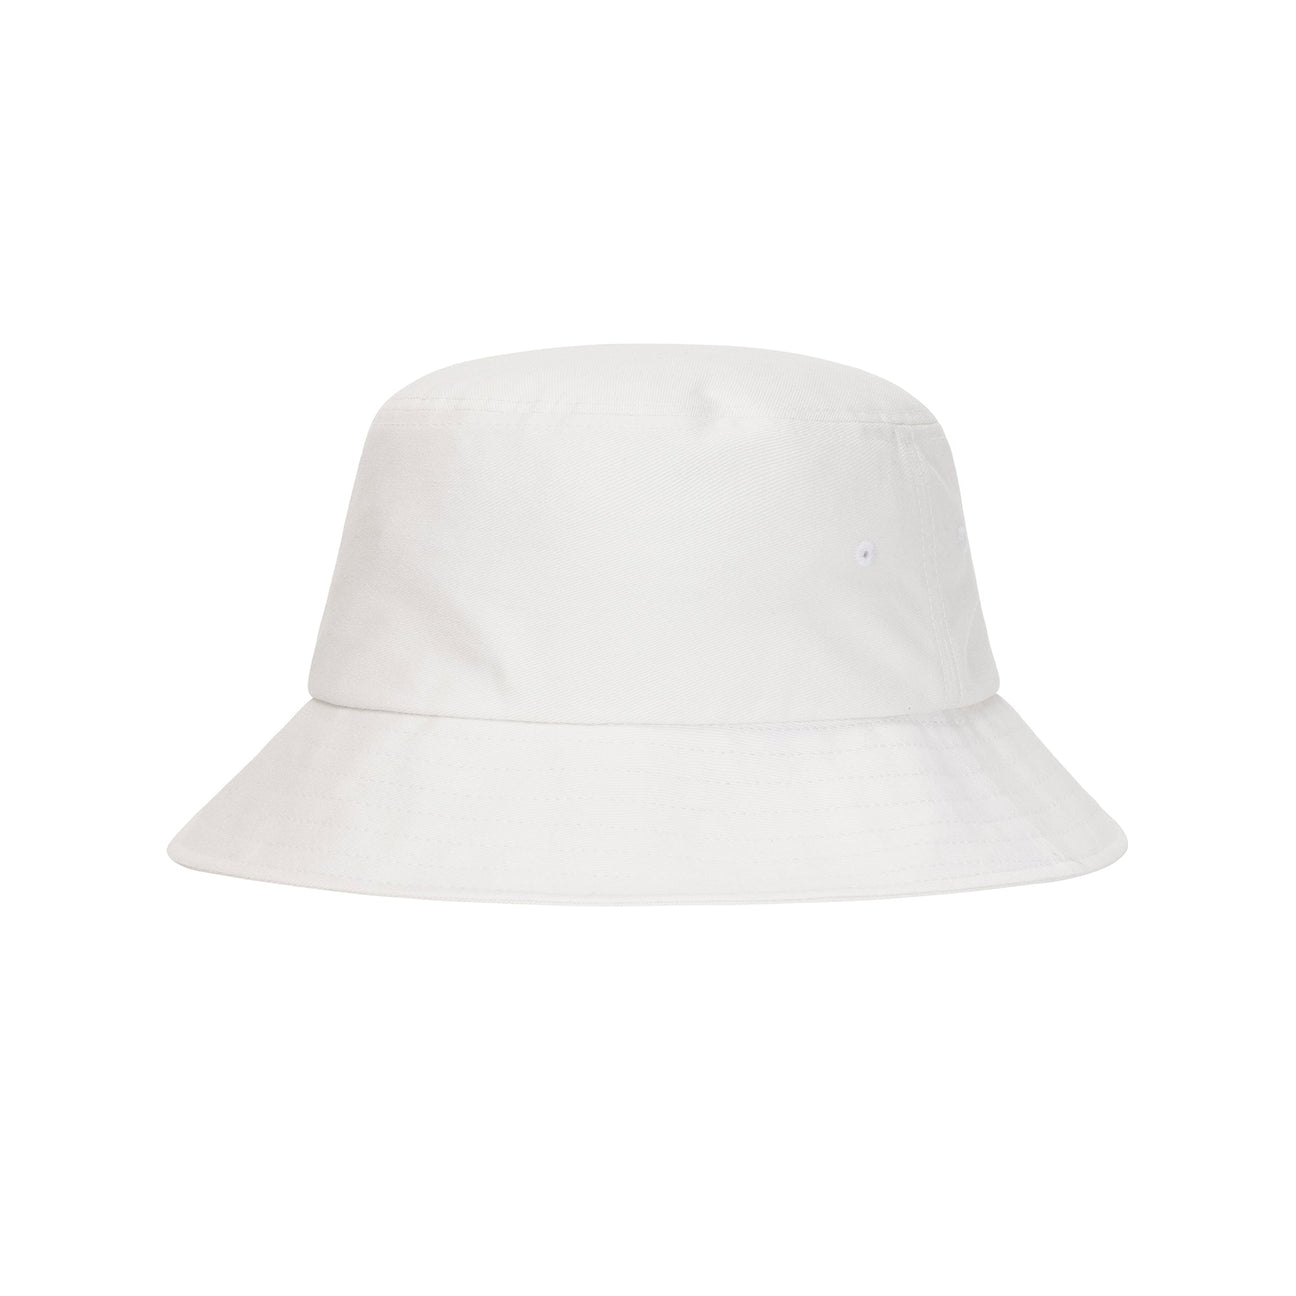 Big Stock Bucket Hat White